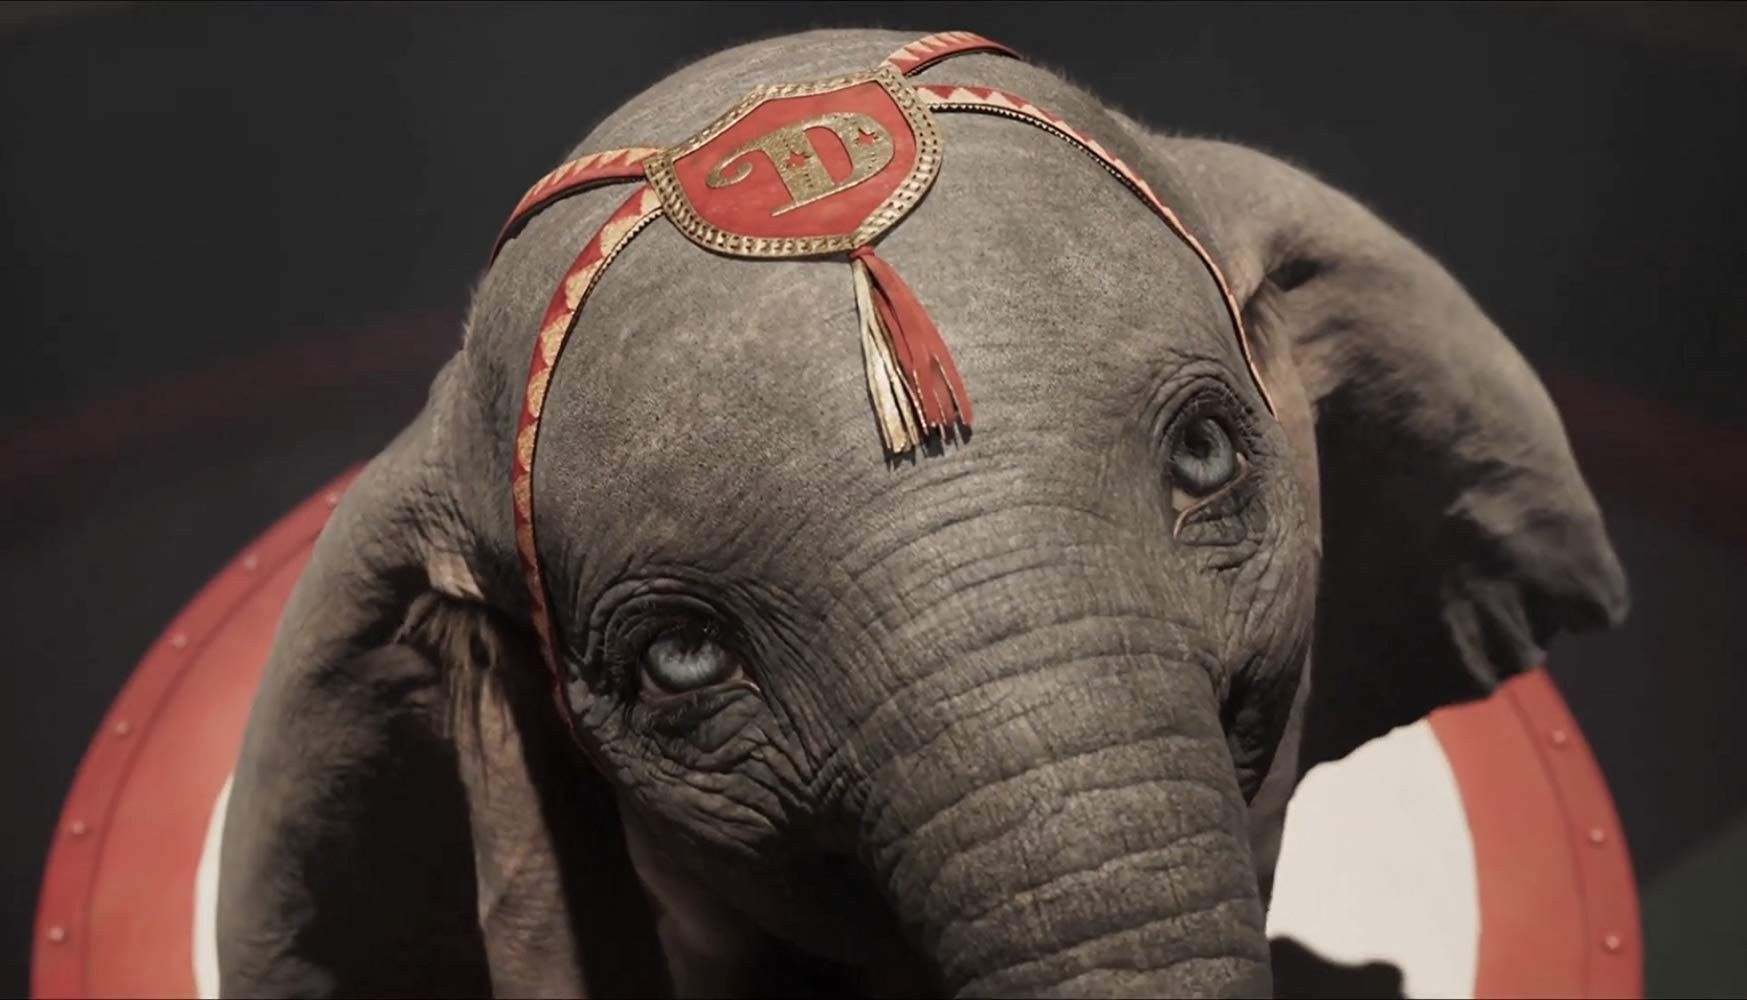 Tim Burton Flies Us Through a Scene in 'Dumbo'